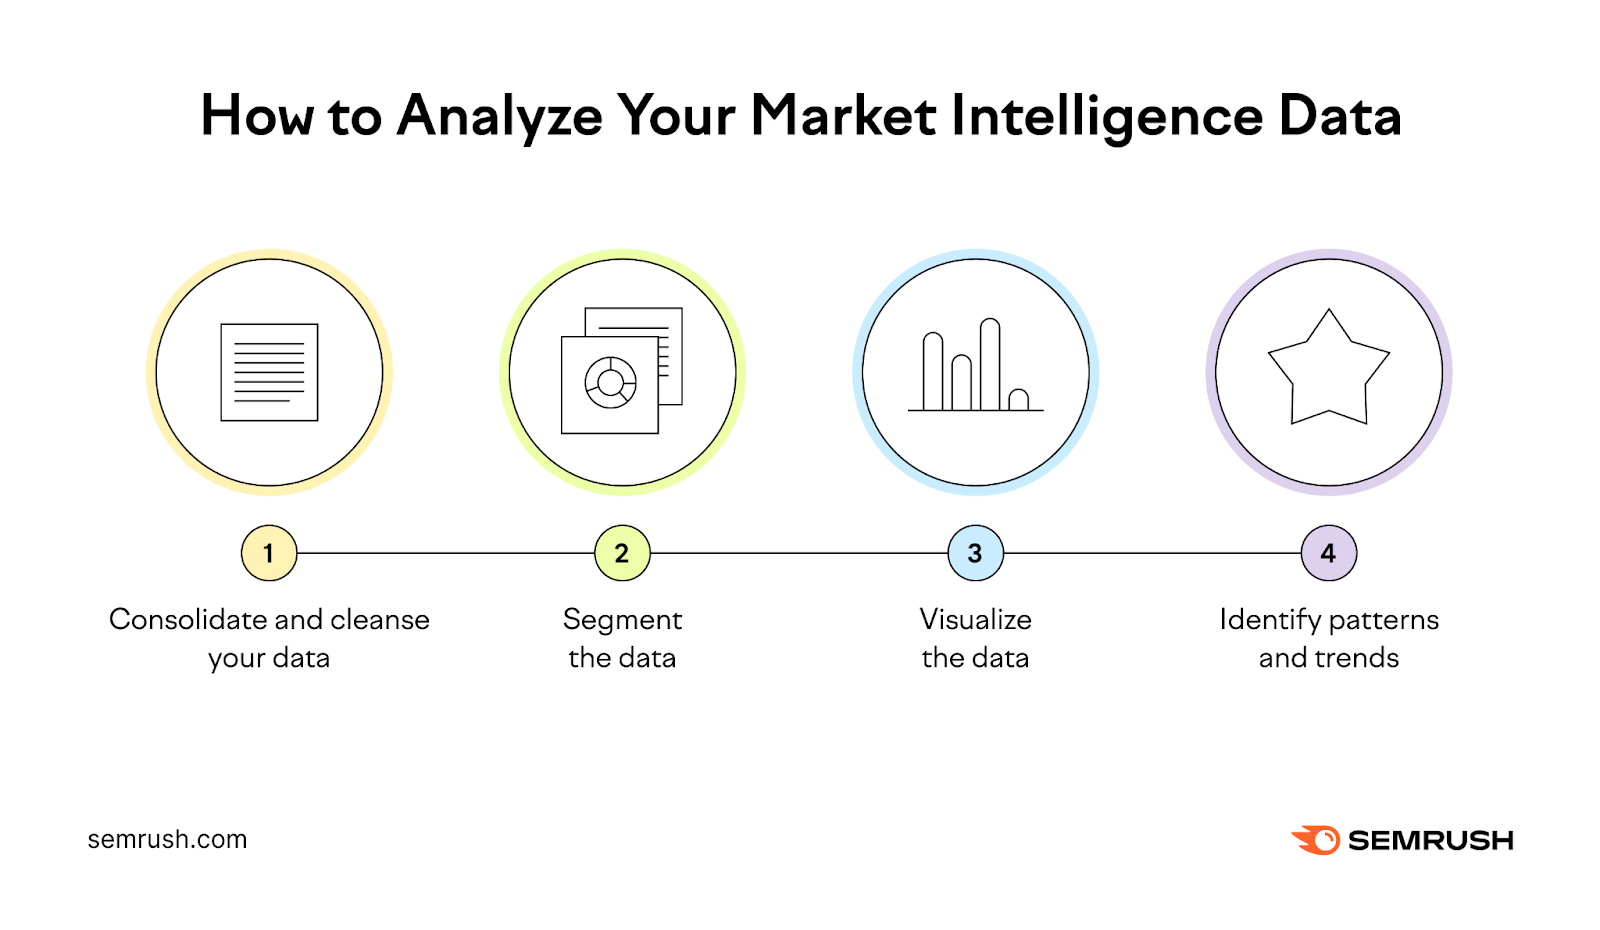 How to analyze your market intelligence data